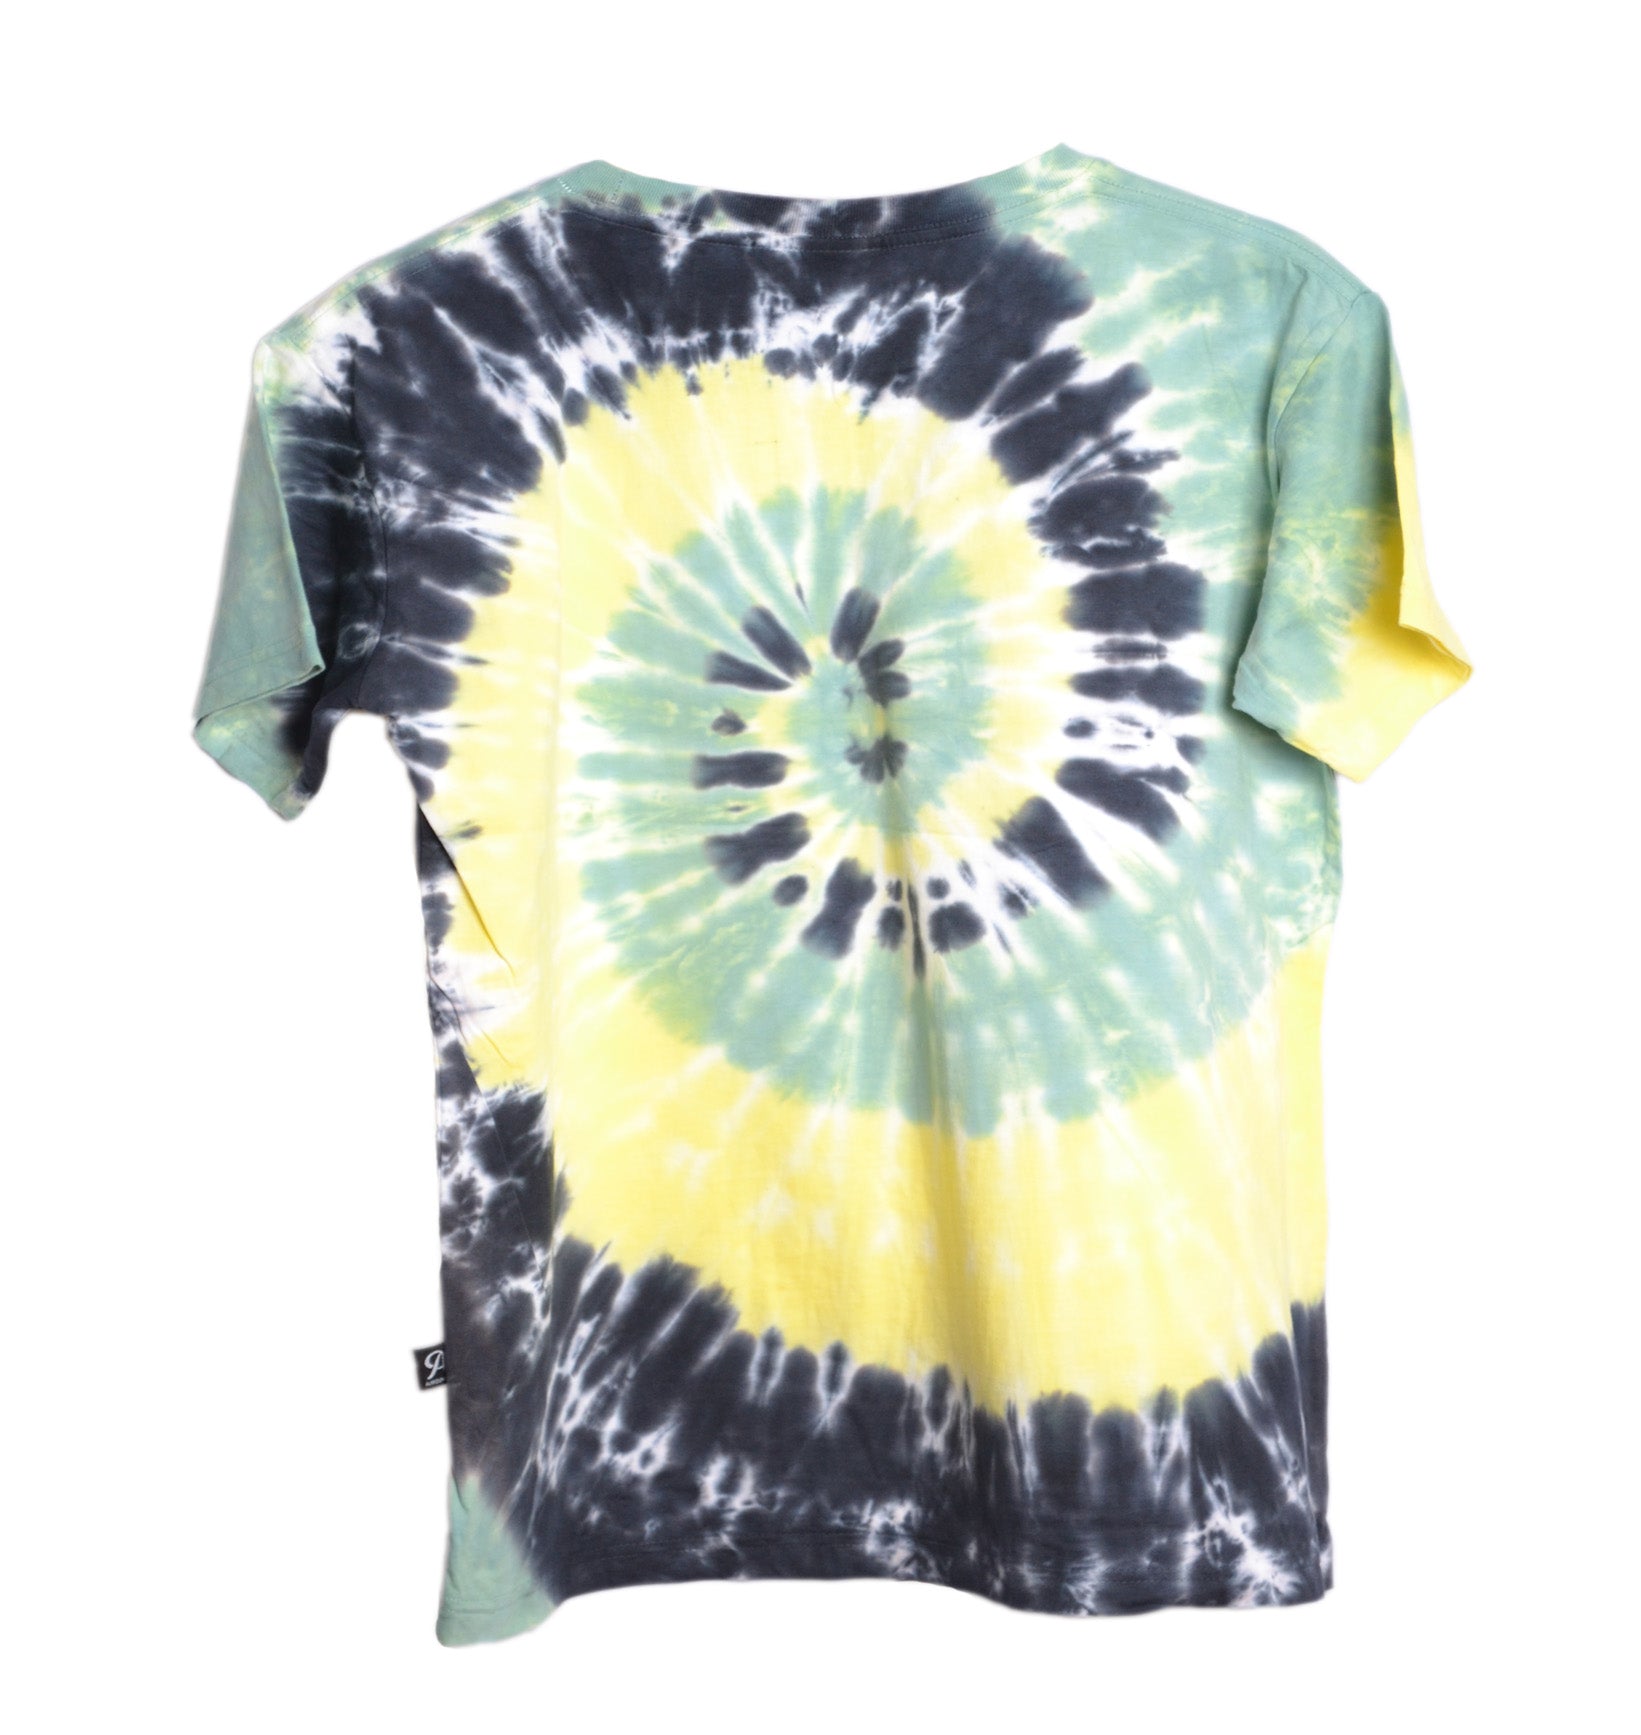 Vue dos t-shirt tie and dye effet spirale couleur vert, jaune et noir - GL BOUTIK